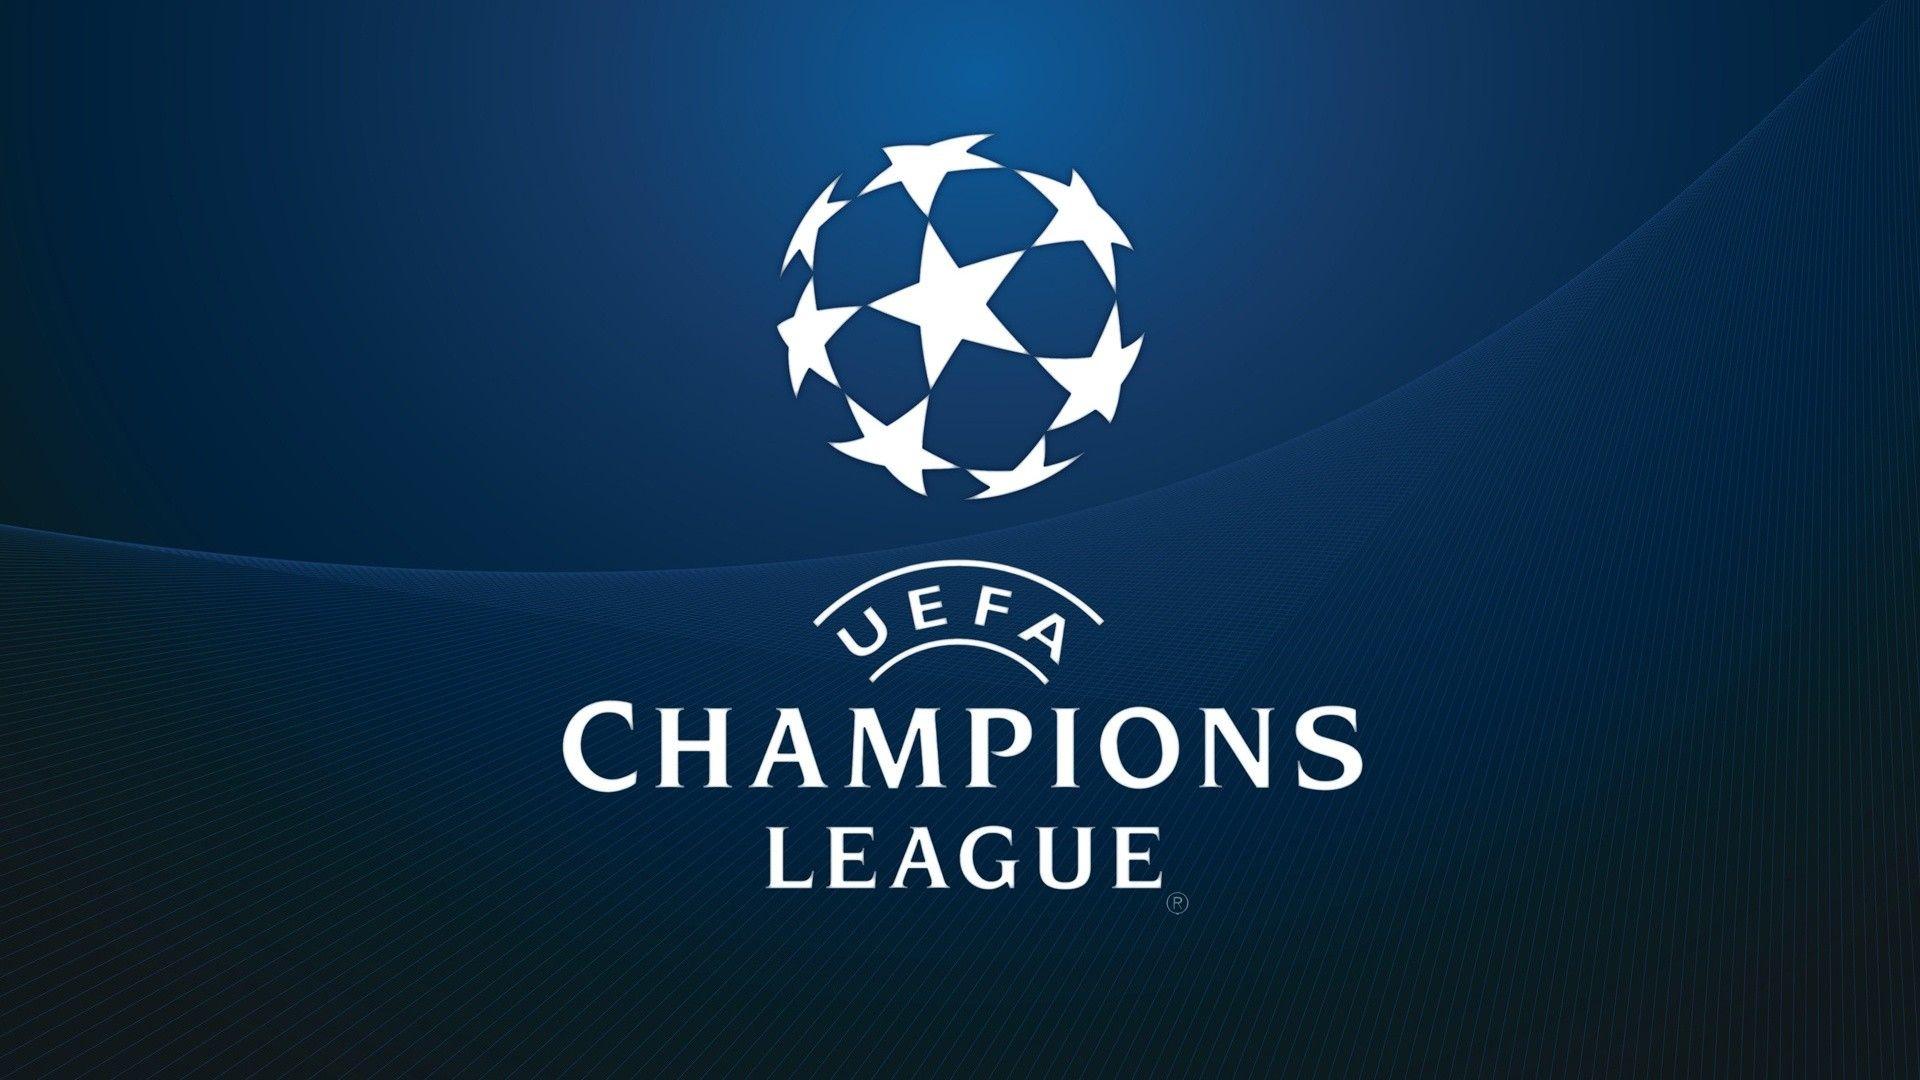 UEFA Champions League Logo HD Wallpaper. places you should go